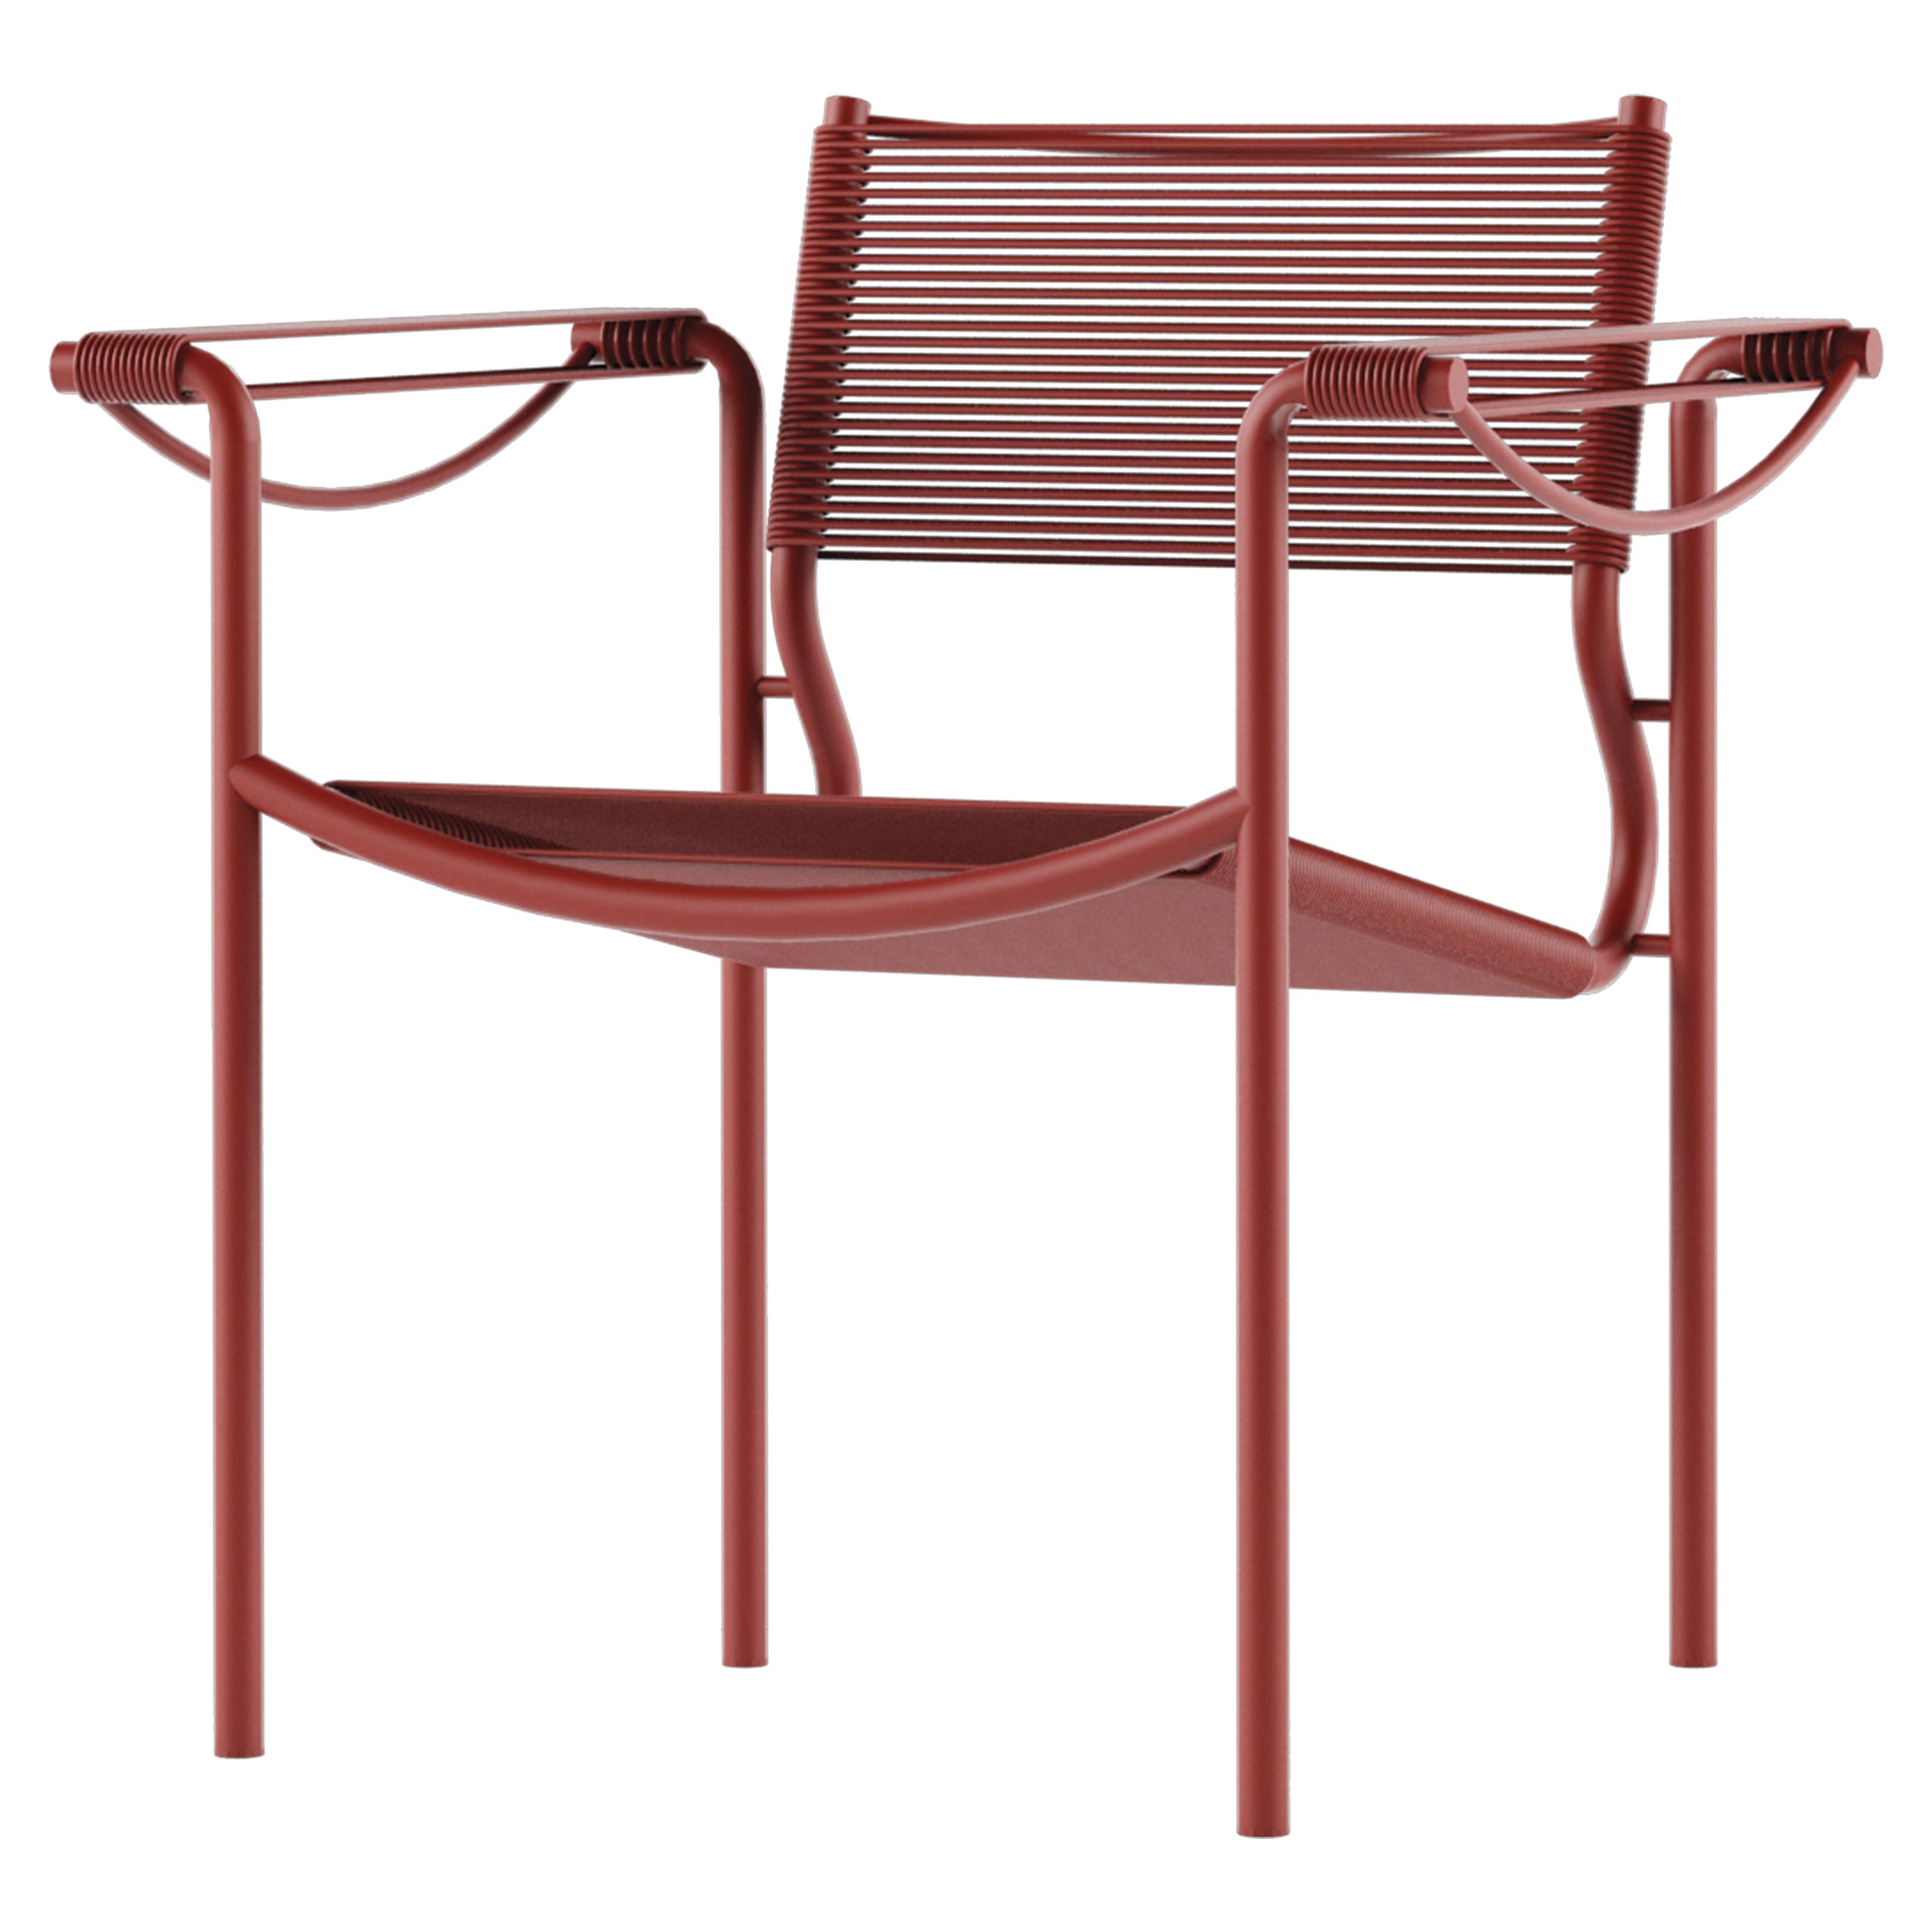 Alias 109 Spaghetti-Sessel mit rotem PVC-Sitz und rot lackiertem Stahlgestell